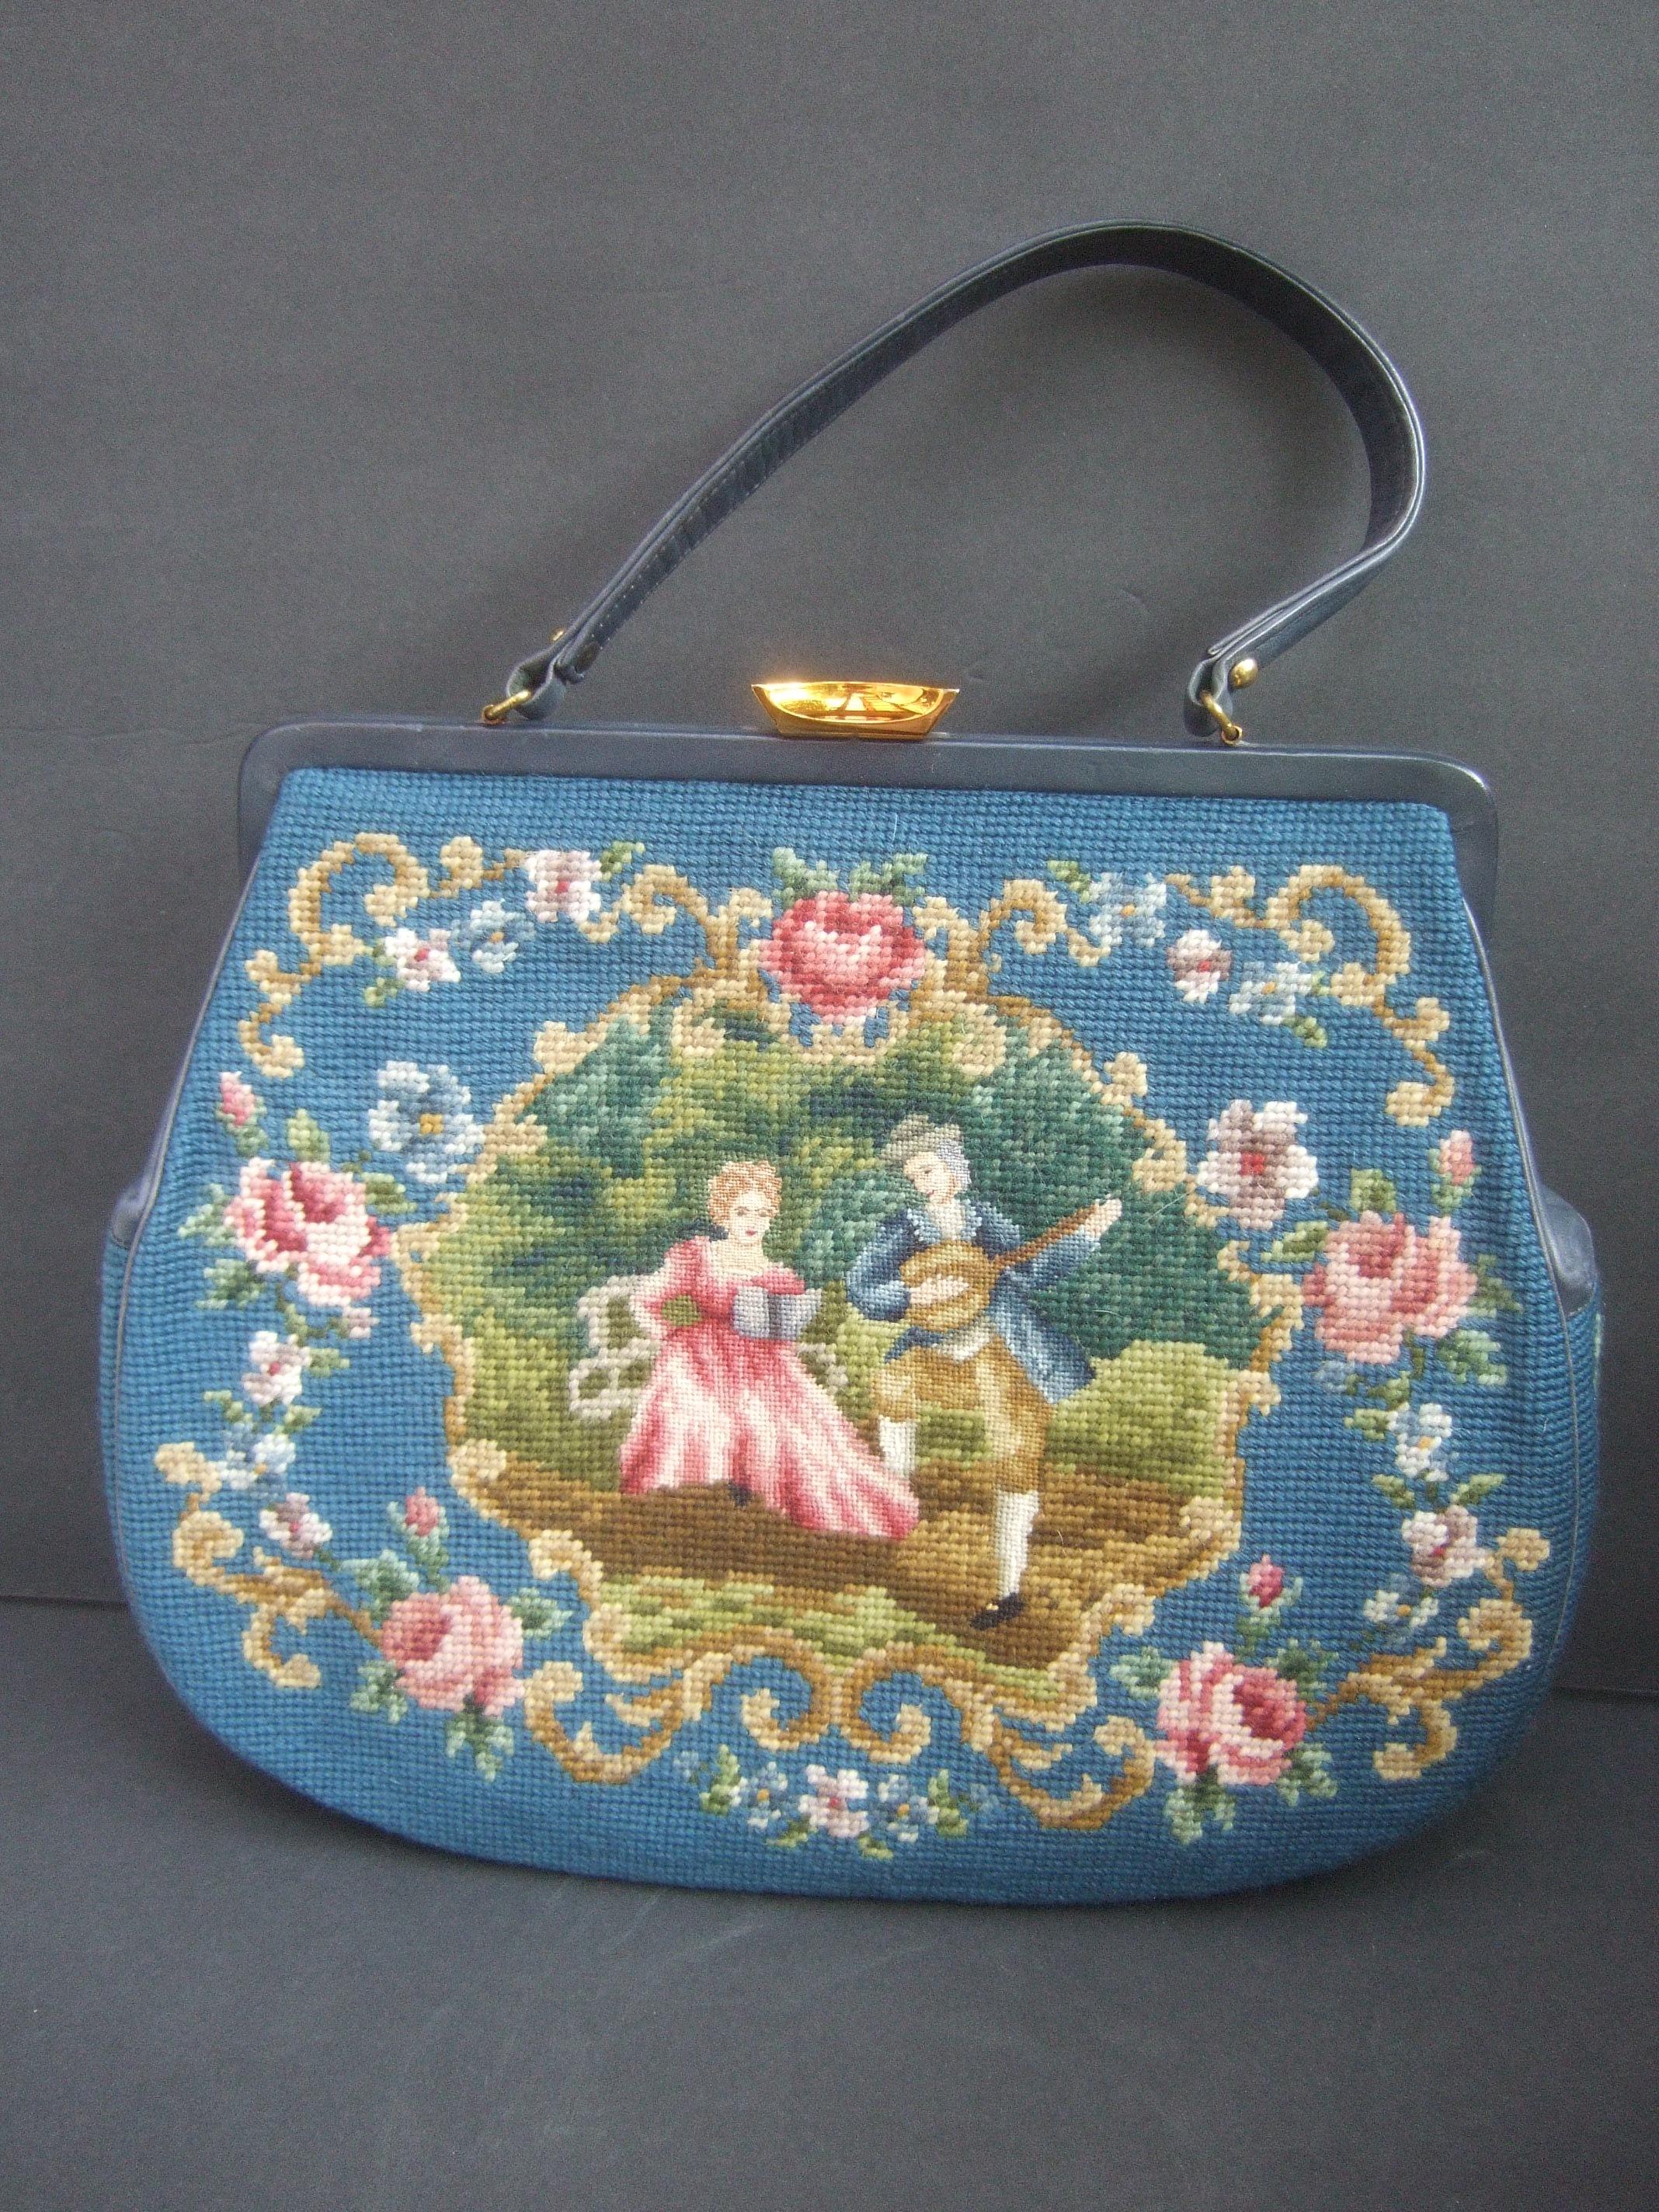 needlepoint handbag